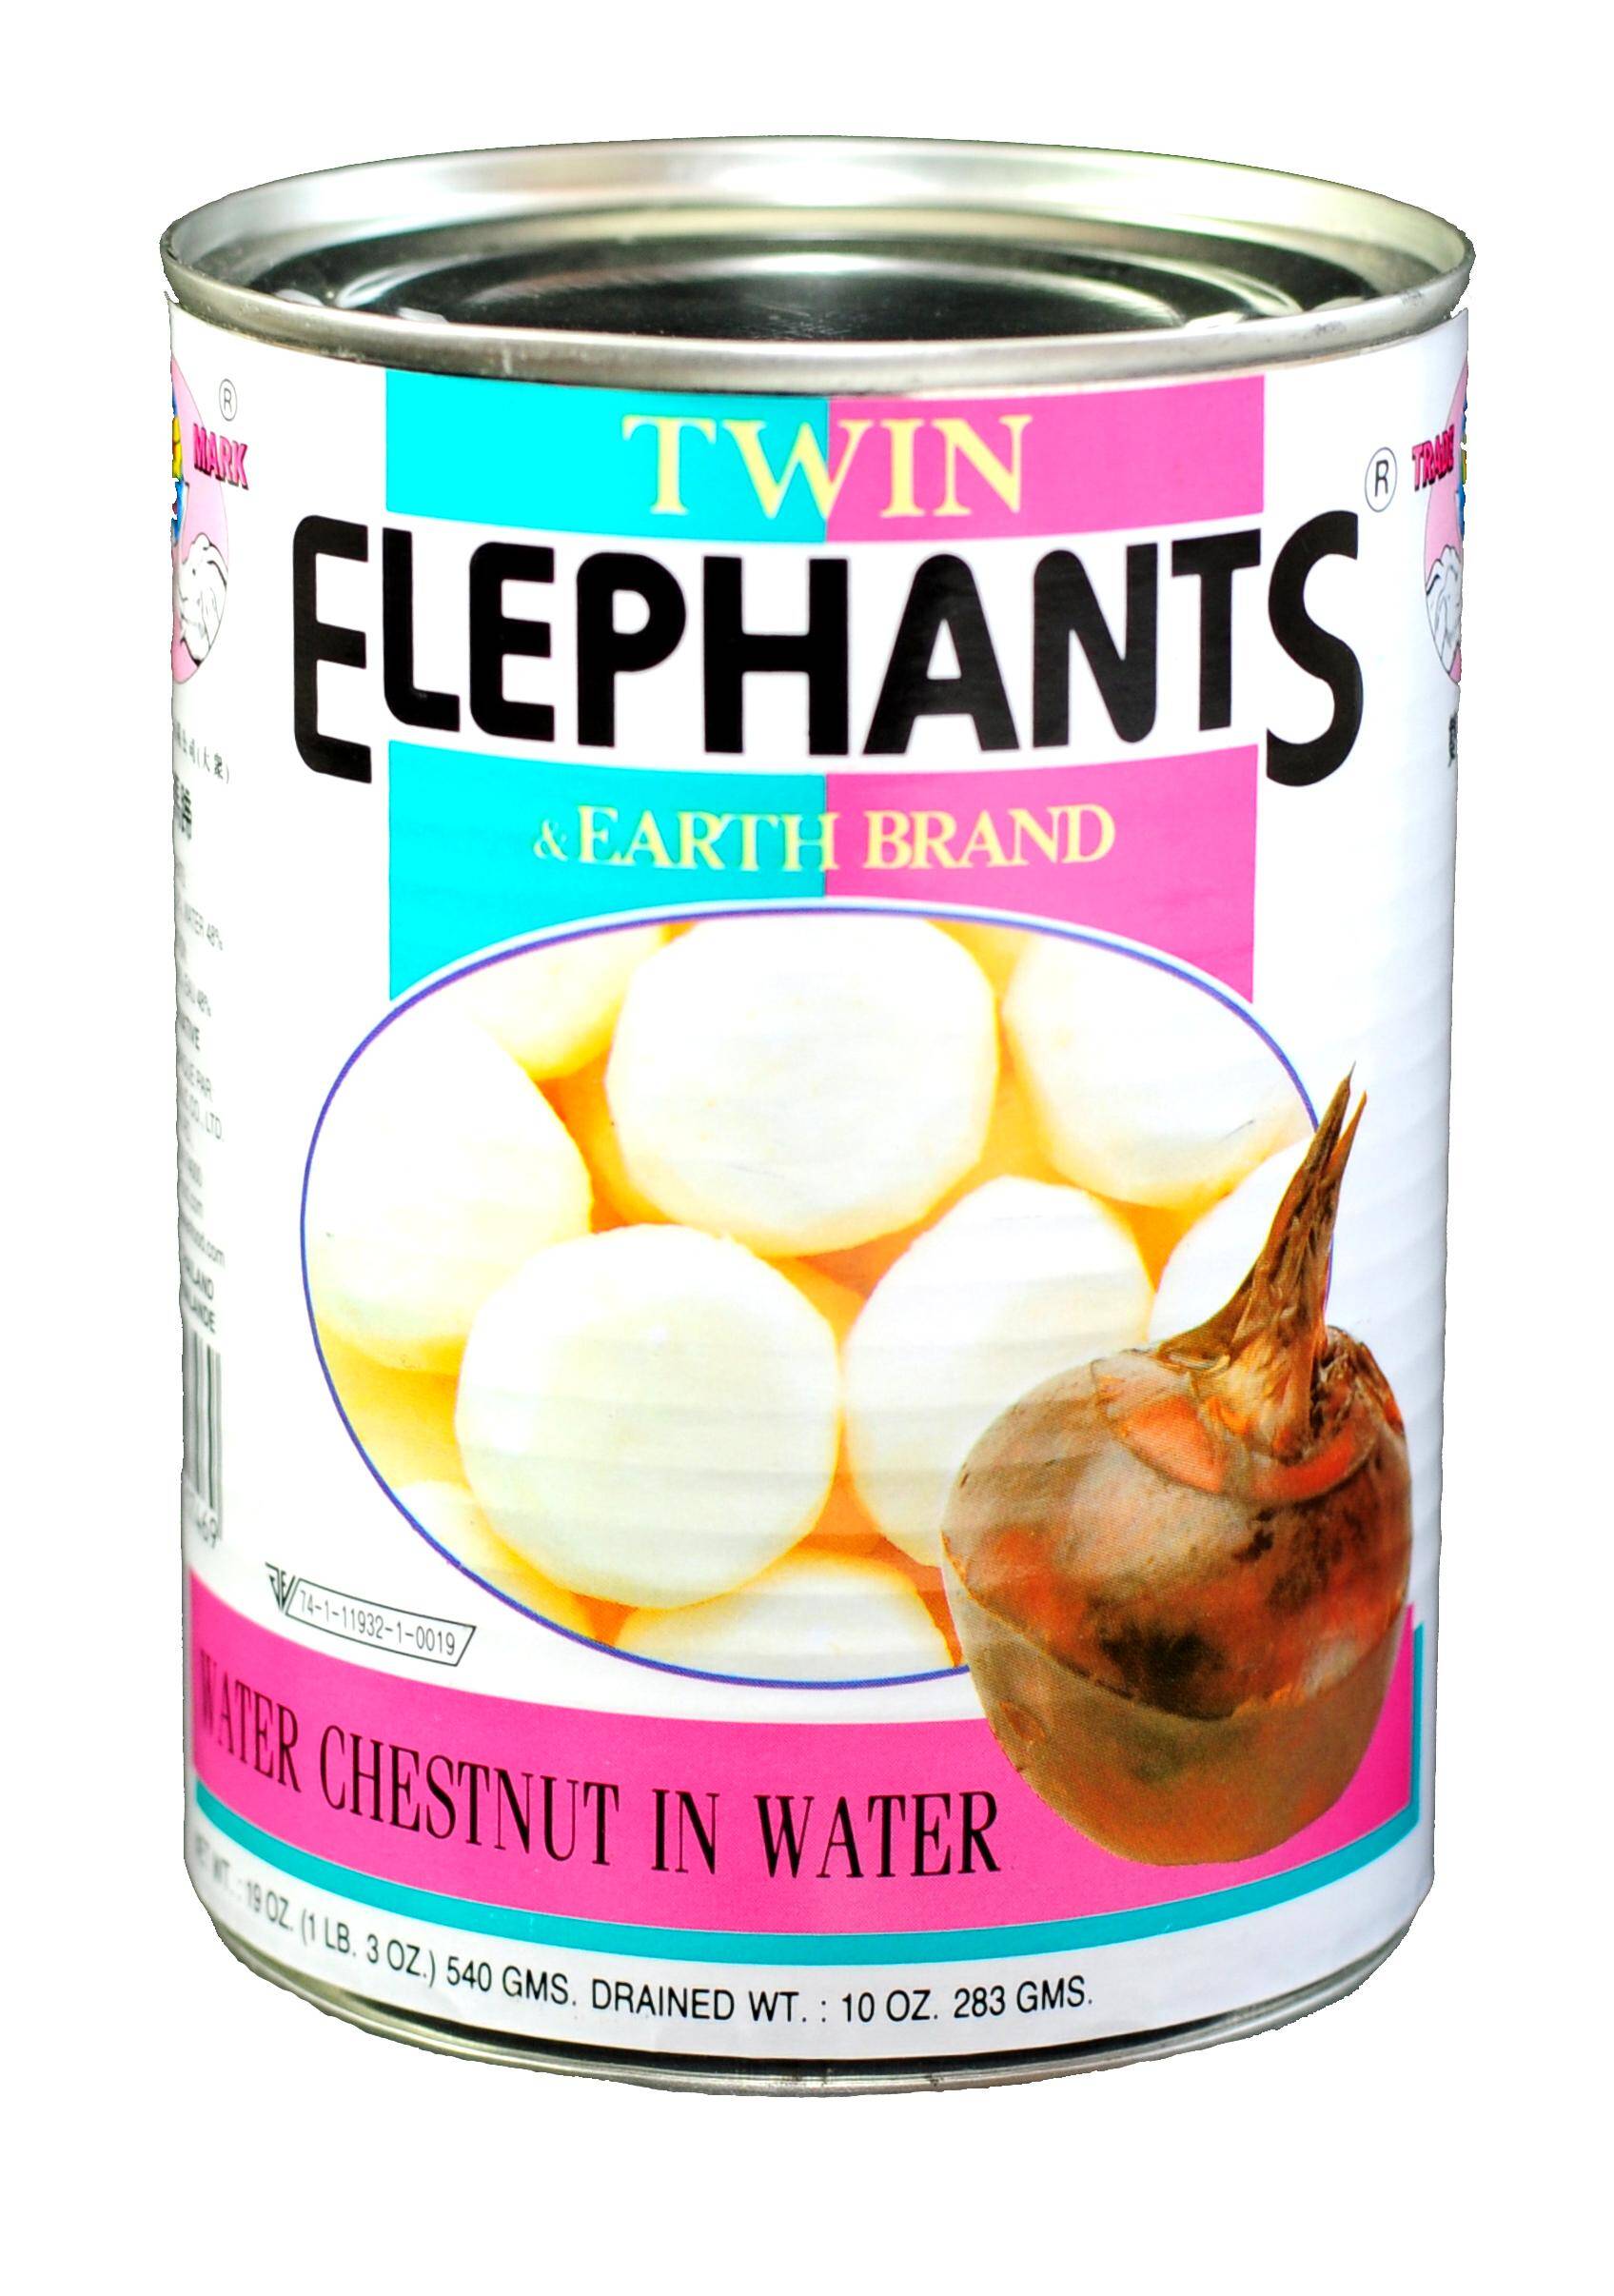 Kasztany wodne 540g/24 Twin Elephants e